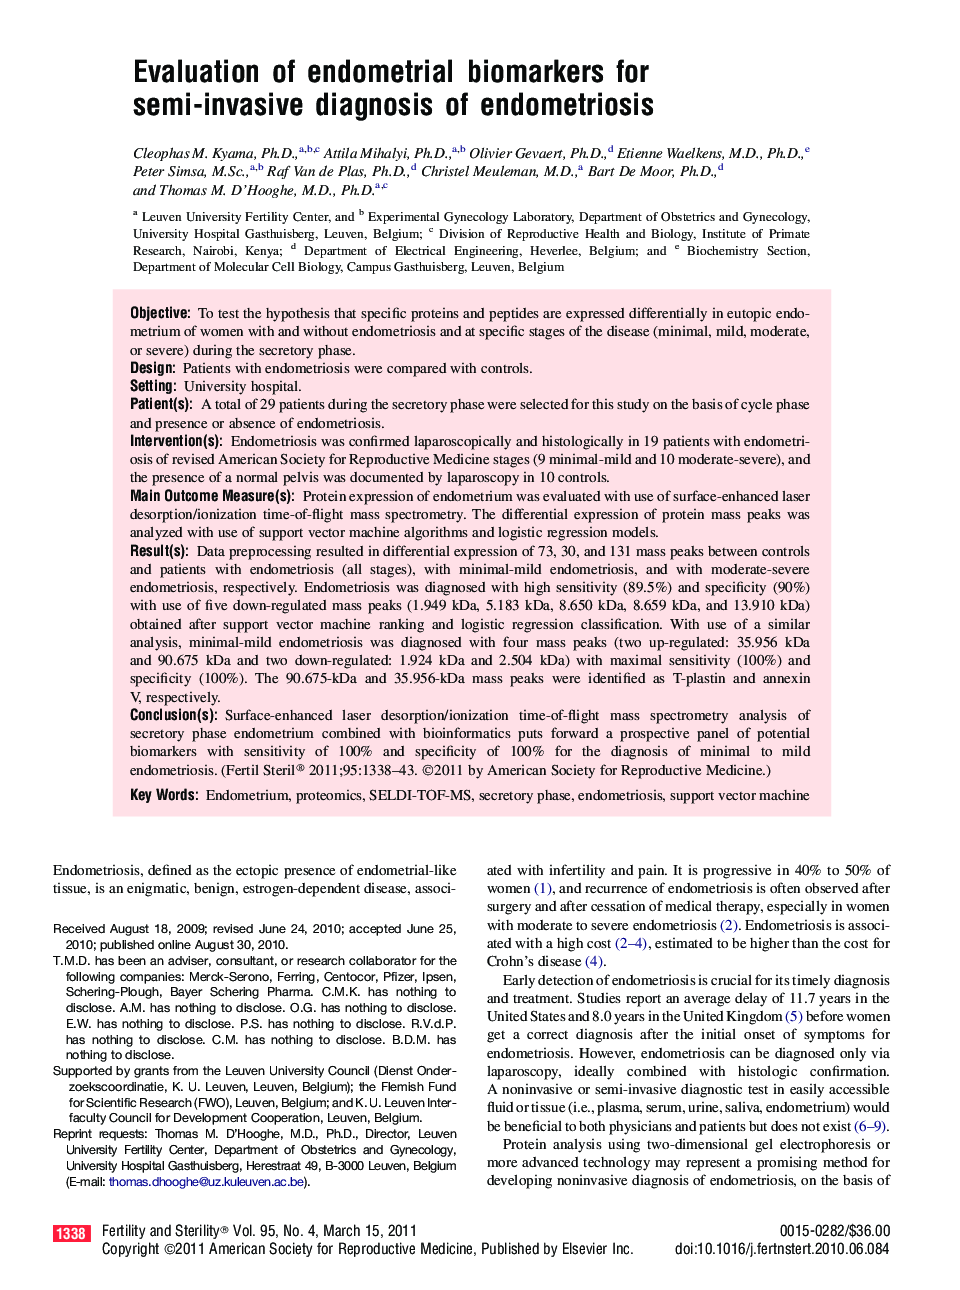 Evaluation of endometrial biomarkers for semi-invasive diagnosis of endometriosis